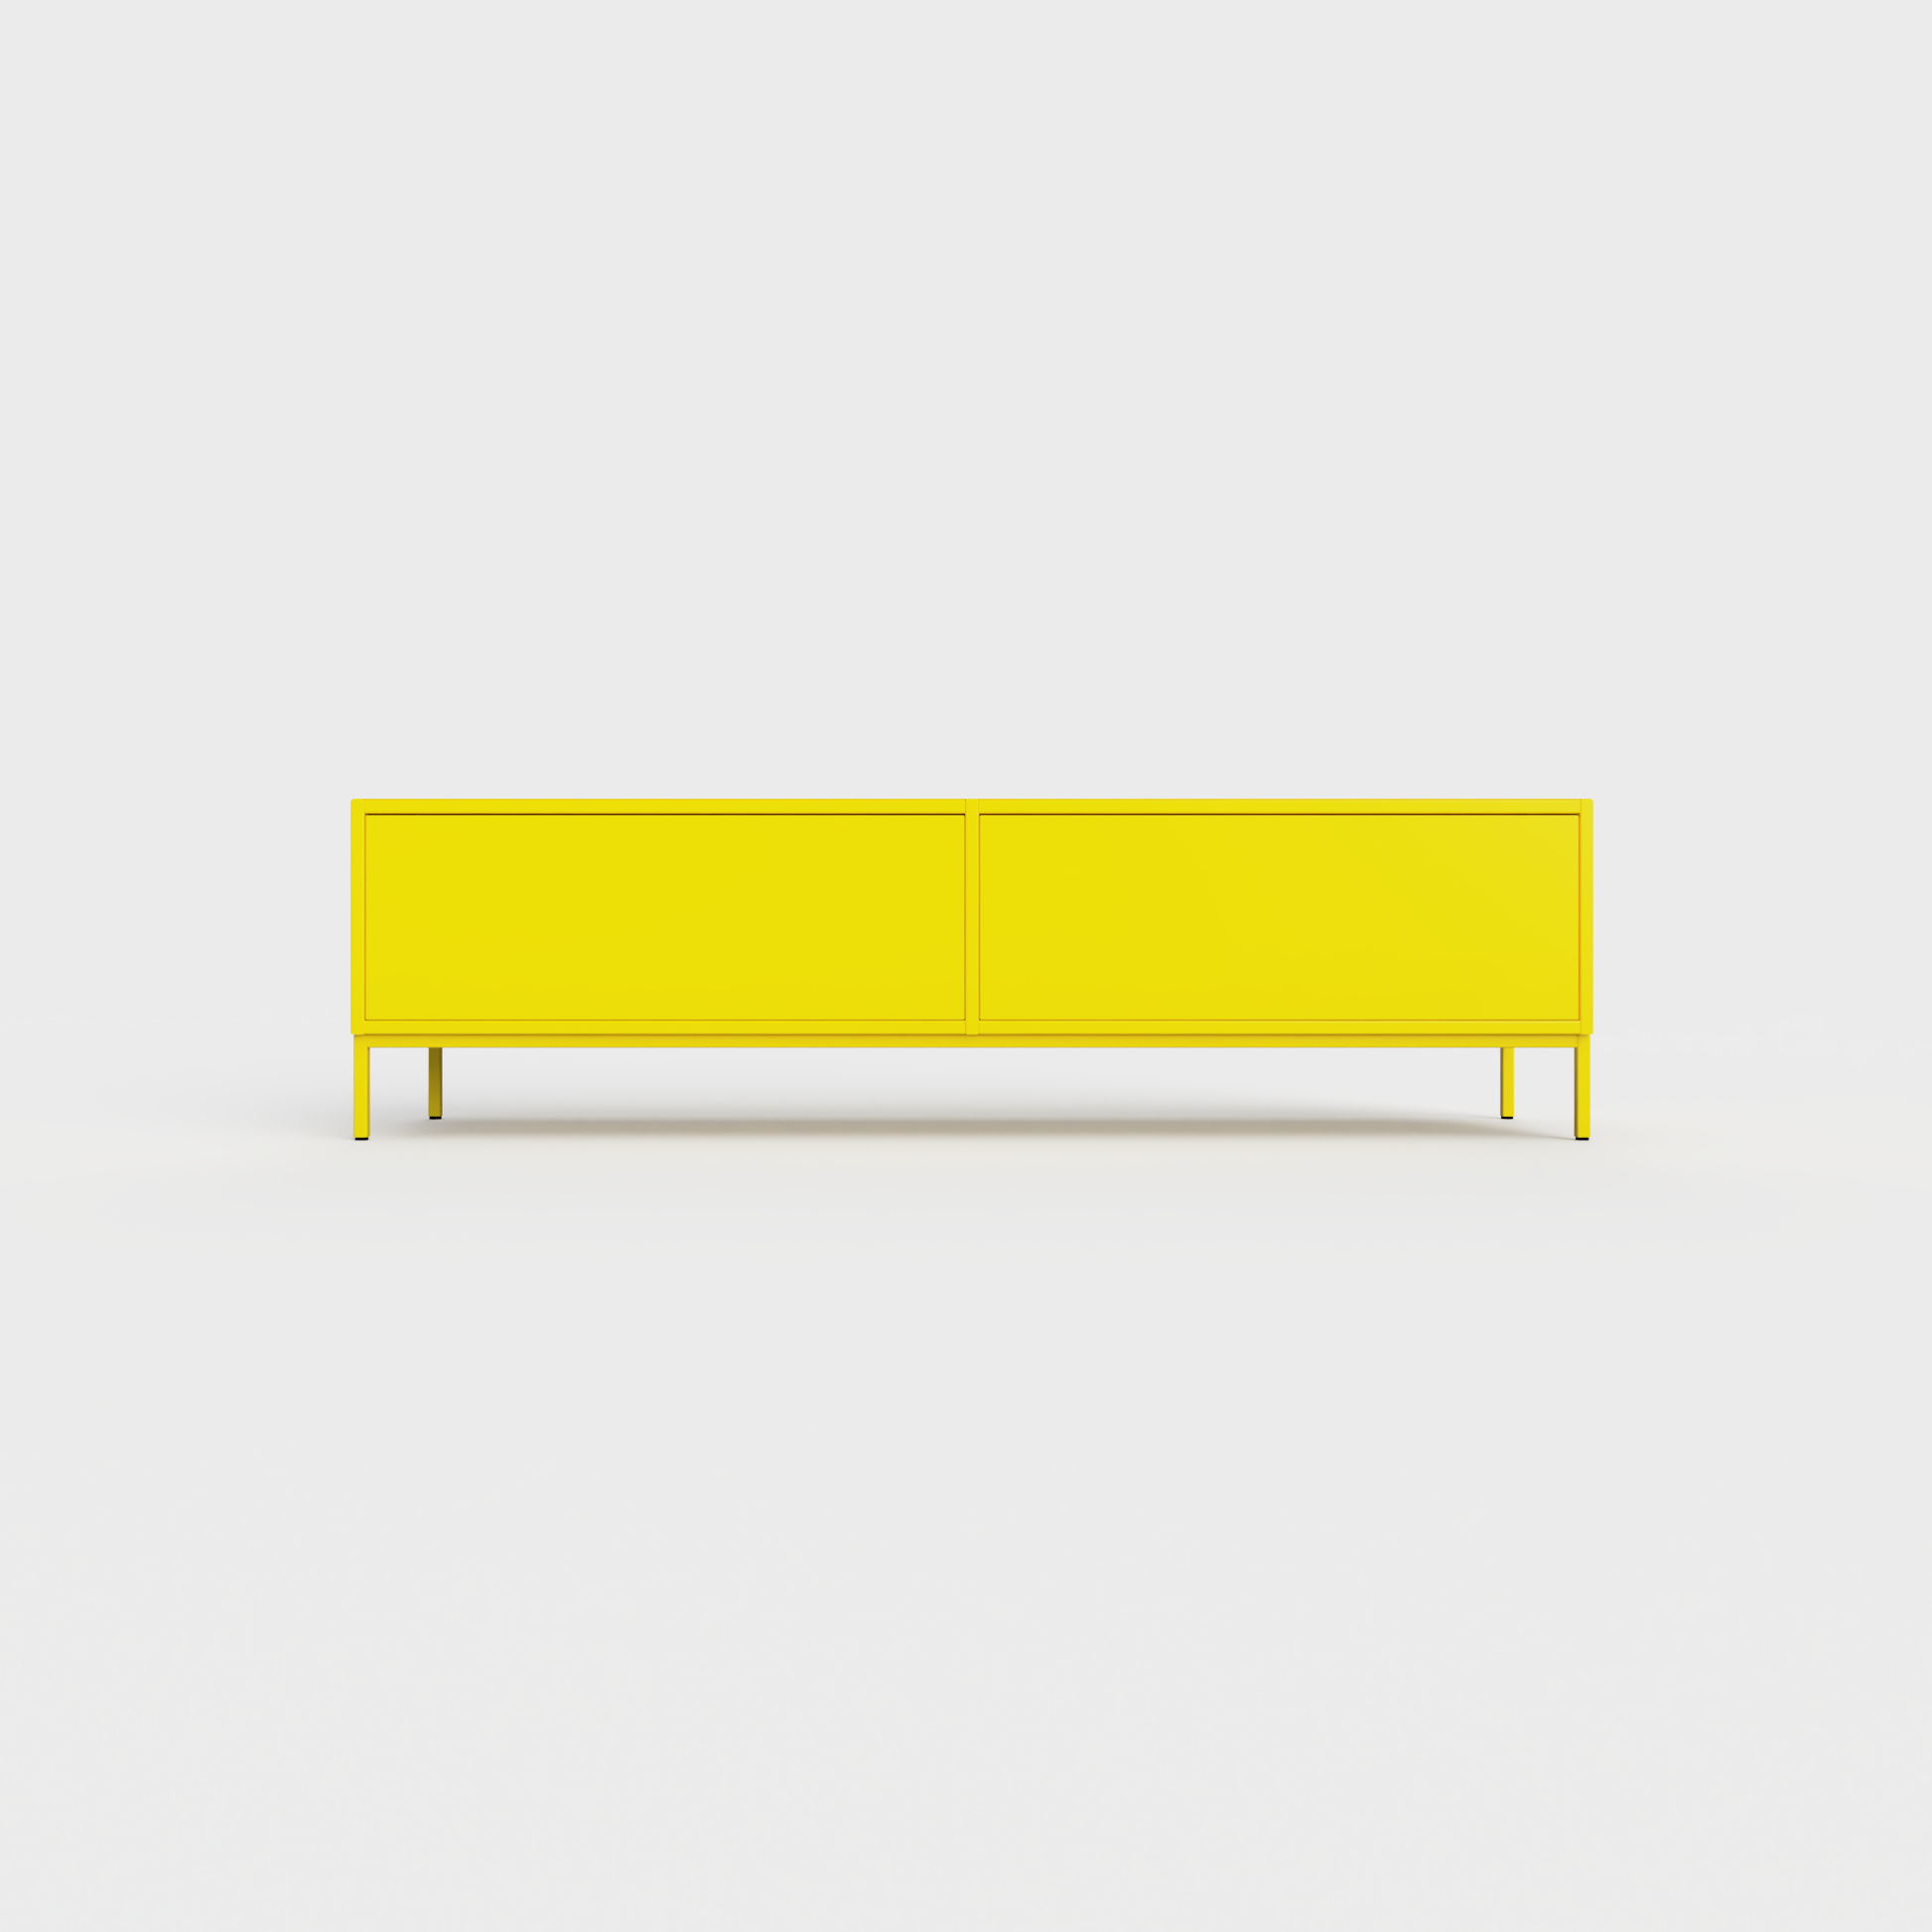 Prunus 01 Lowboard in Lemon color, powder-coated steel, elegant and modern piece of furniture for your living room